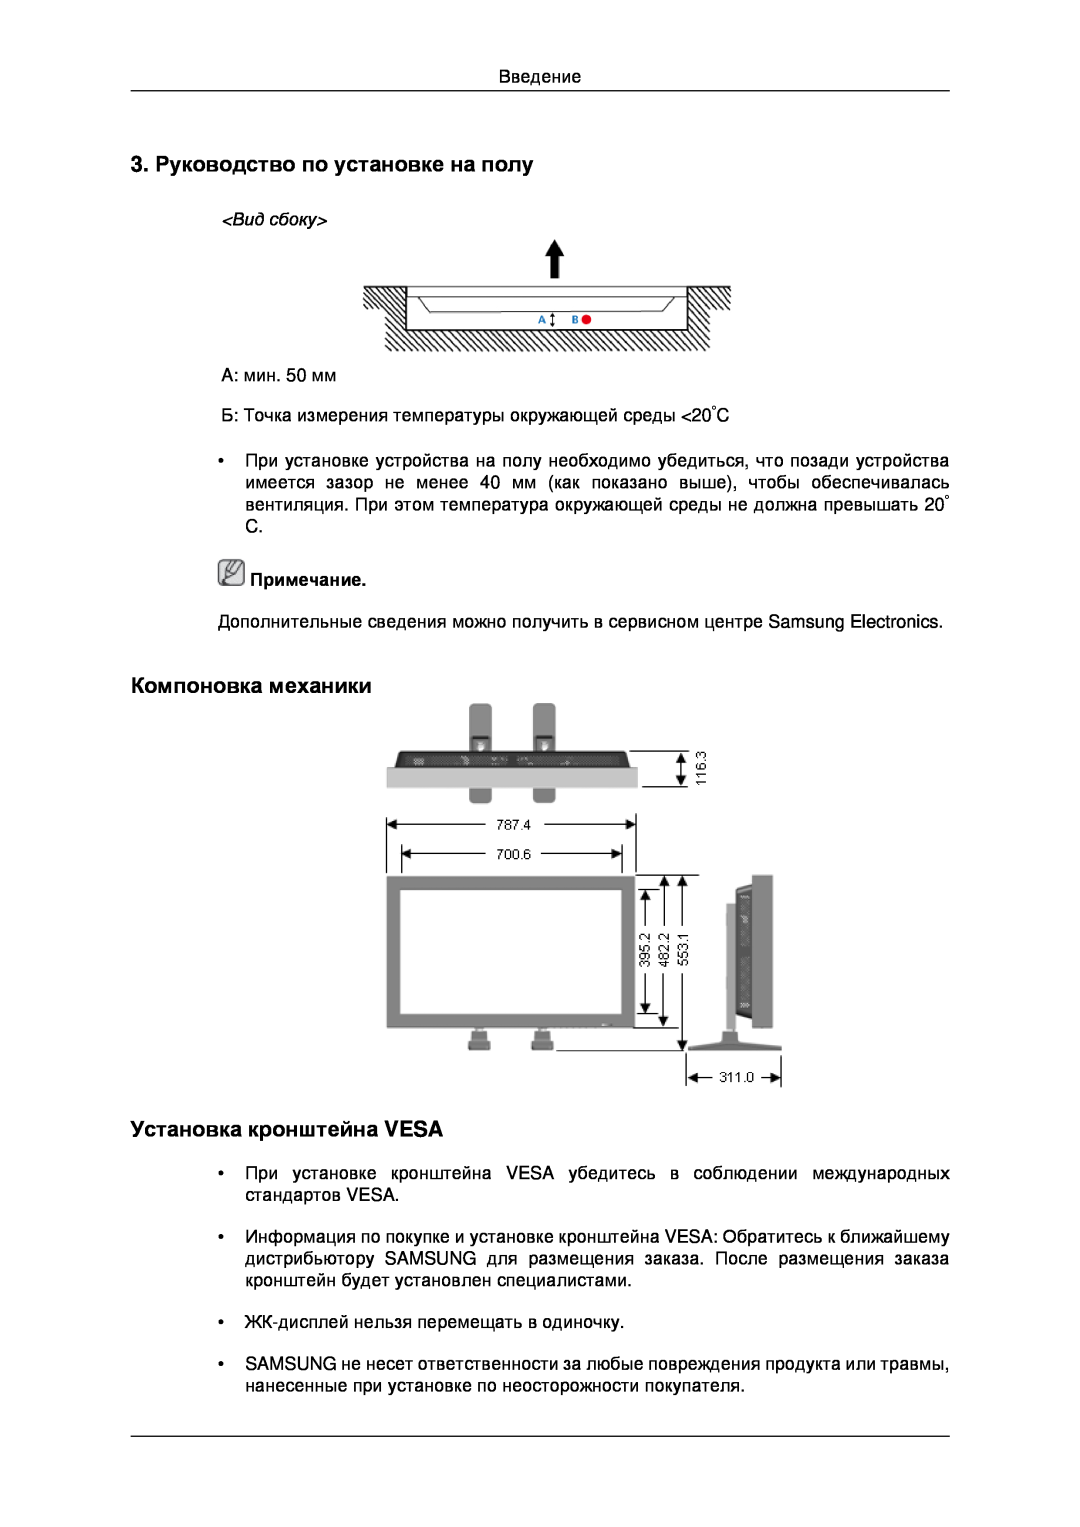 Samsung LH32CRSMBD/EN manual 3. Руководство по установке на полу, Компоновка механики Установка кронштейна VESA, Вид сбоку 